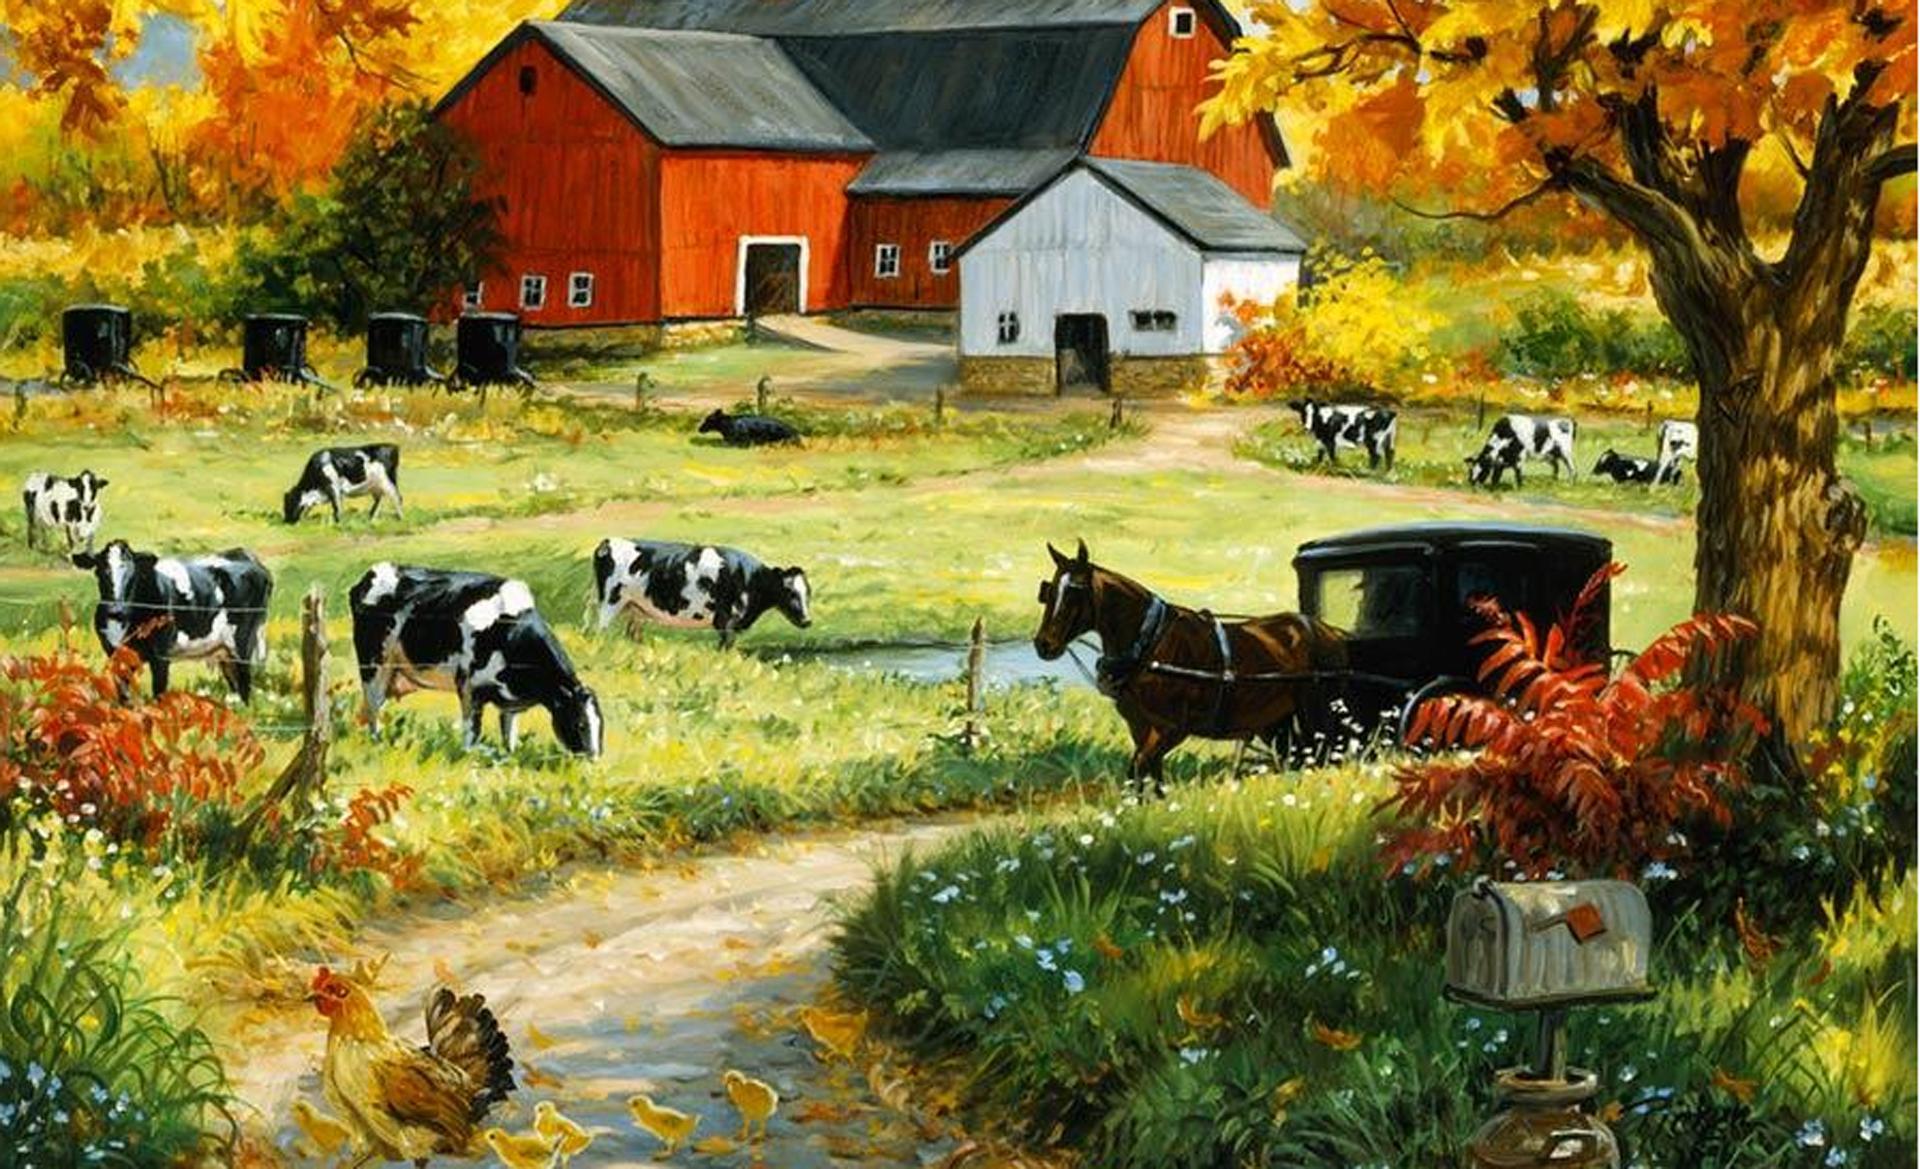 Farmhouse Wallpaper, Best Farmhouse Image.